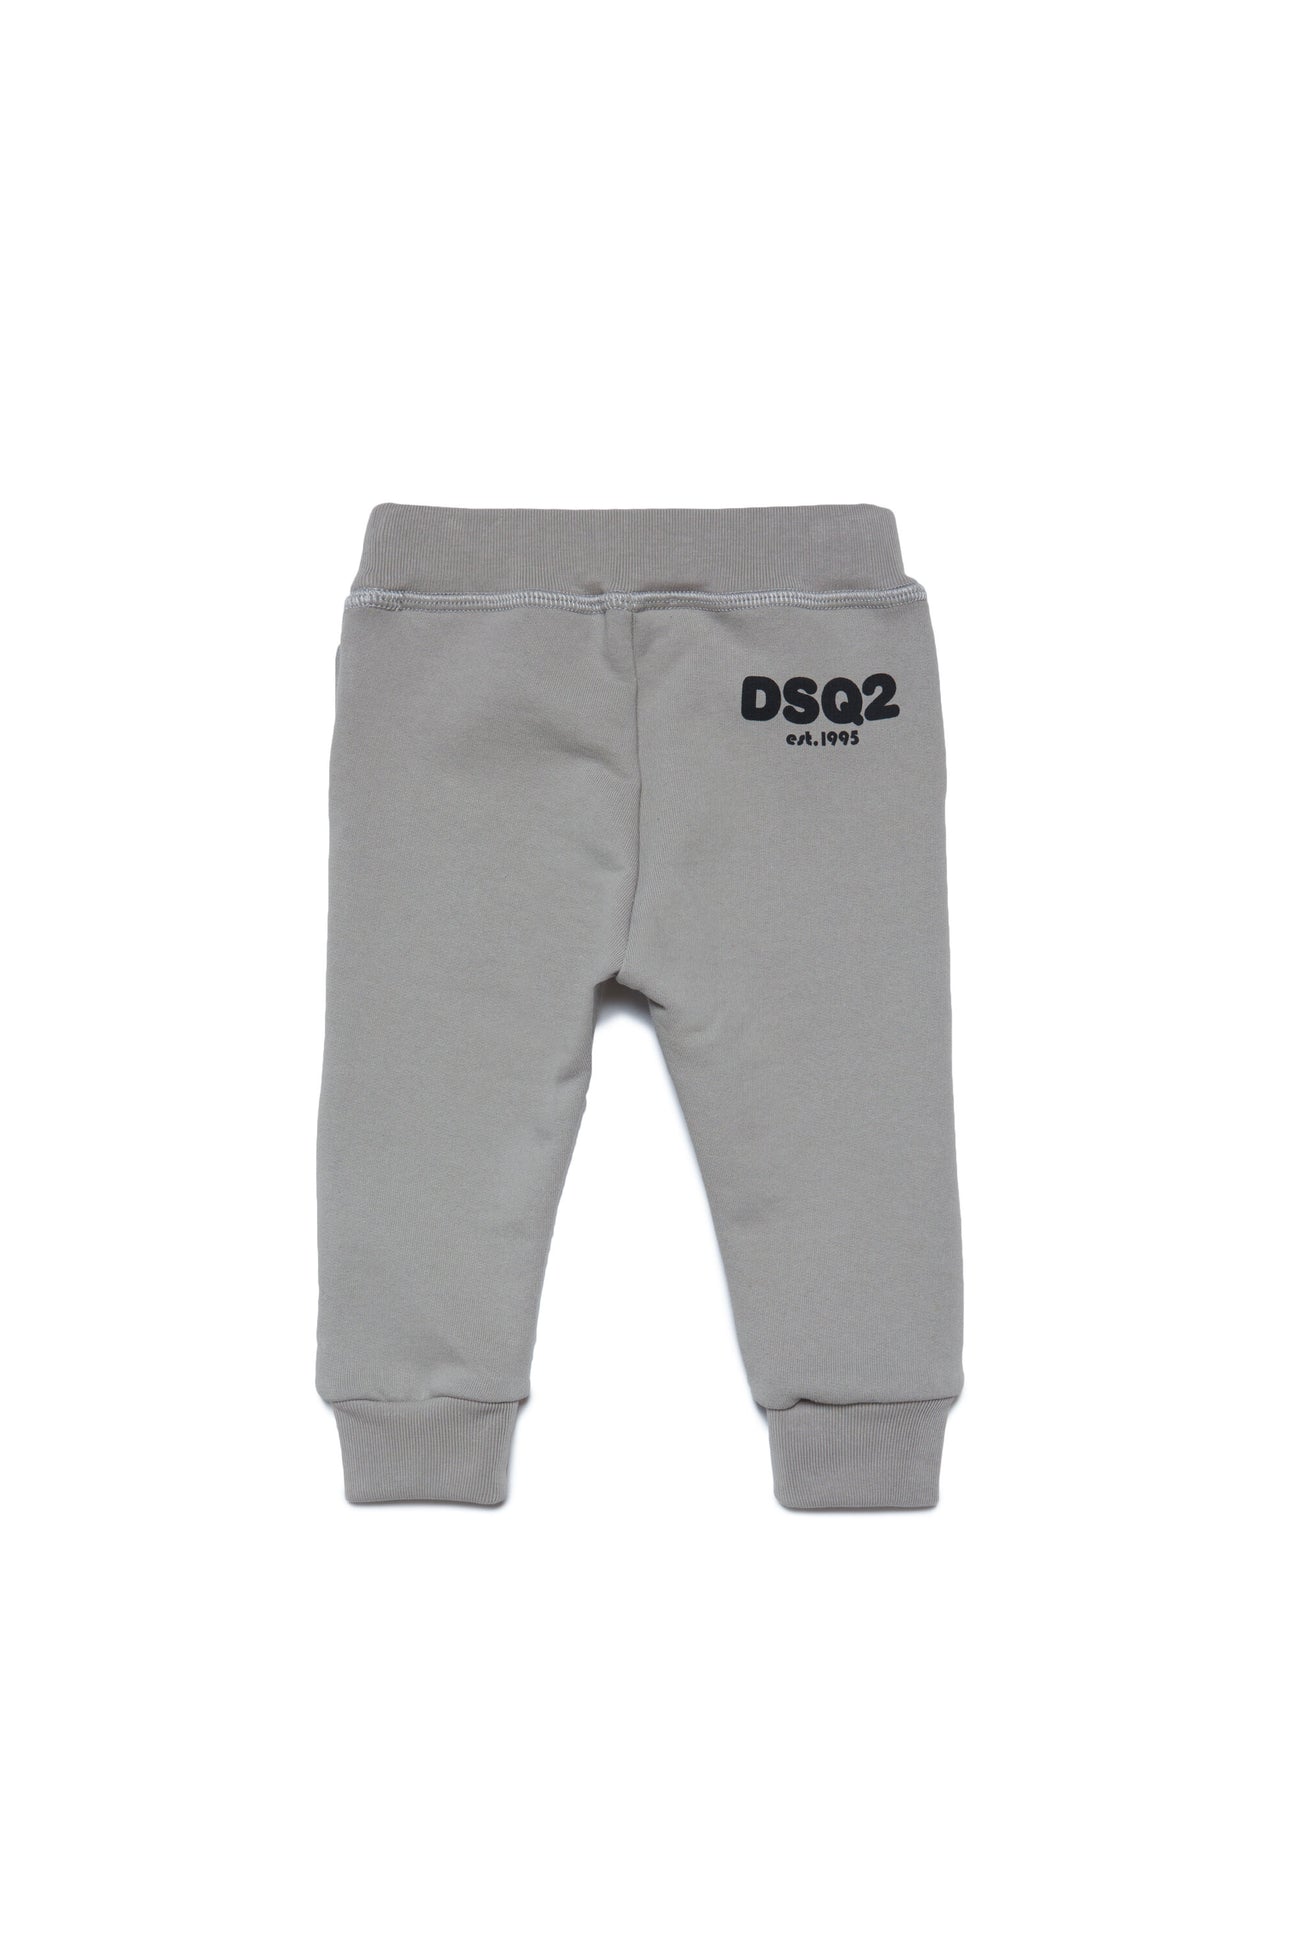 Fleece jogger pants with DSQ2 logo est.1995 Fleece jogger pants with DSQ2 logo est.1995